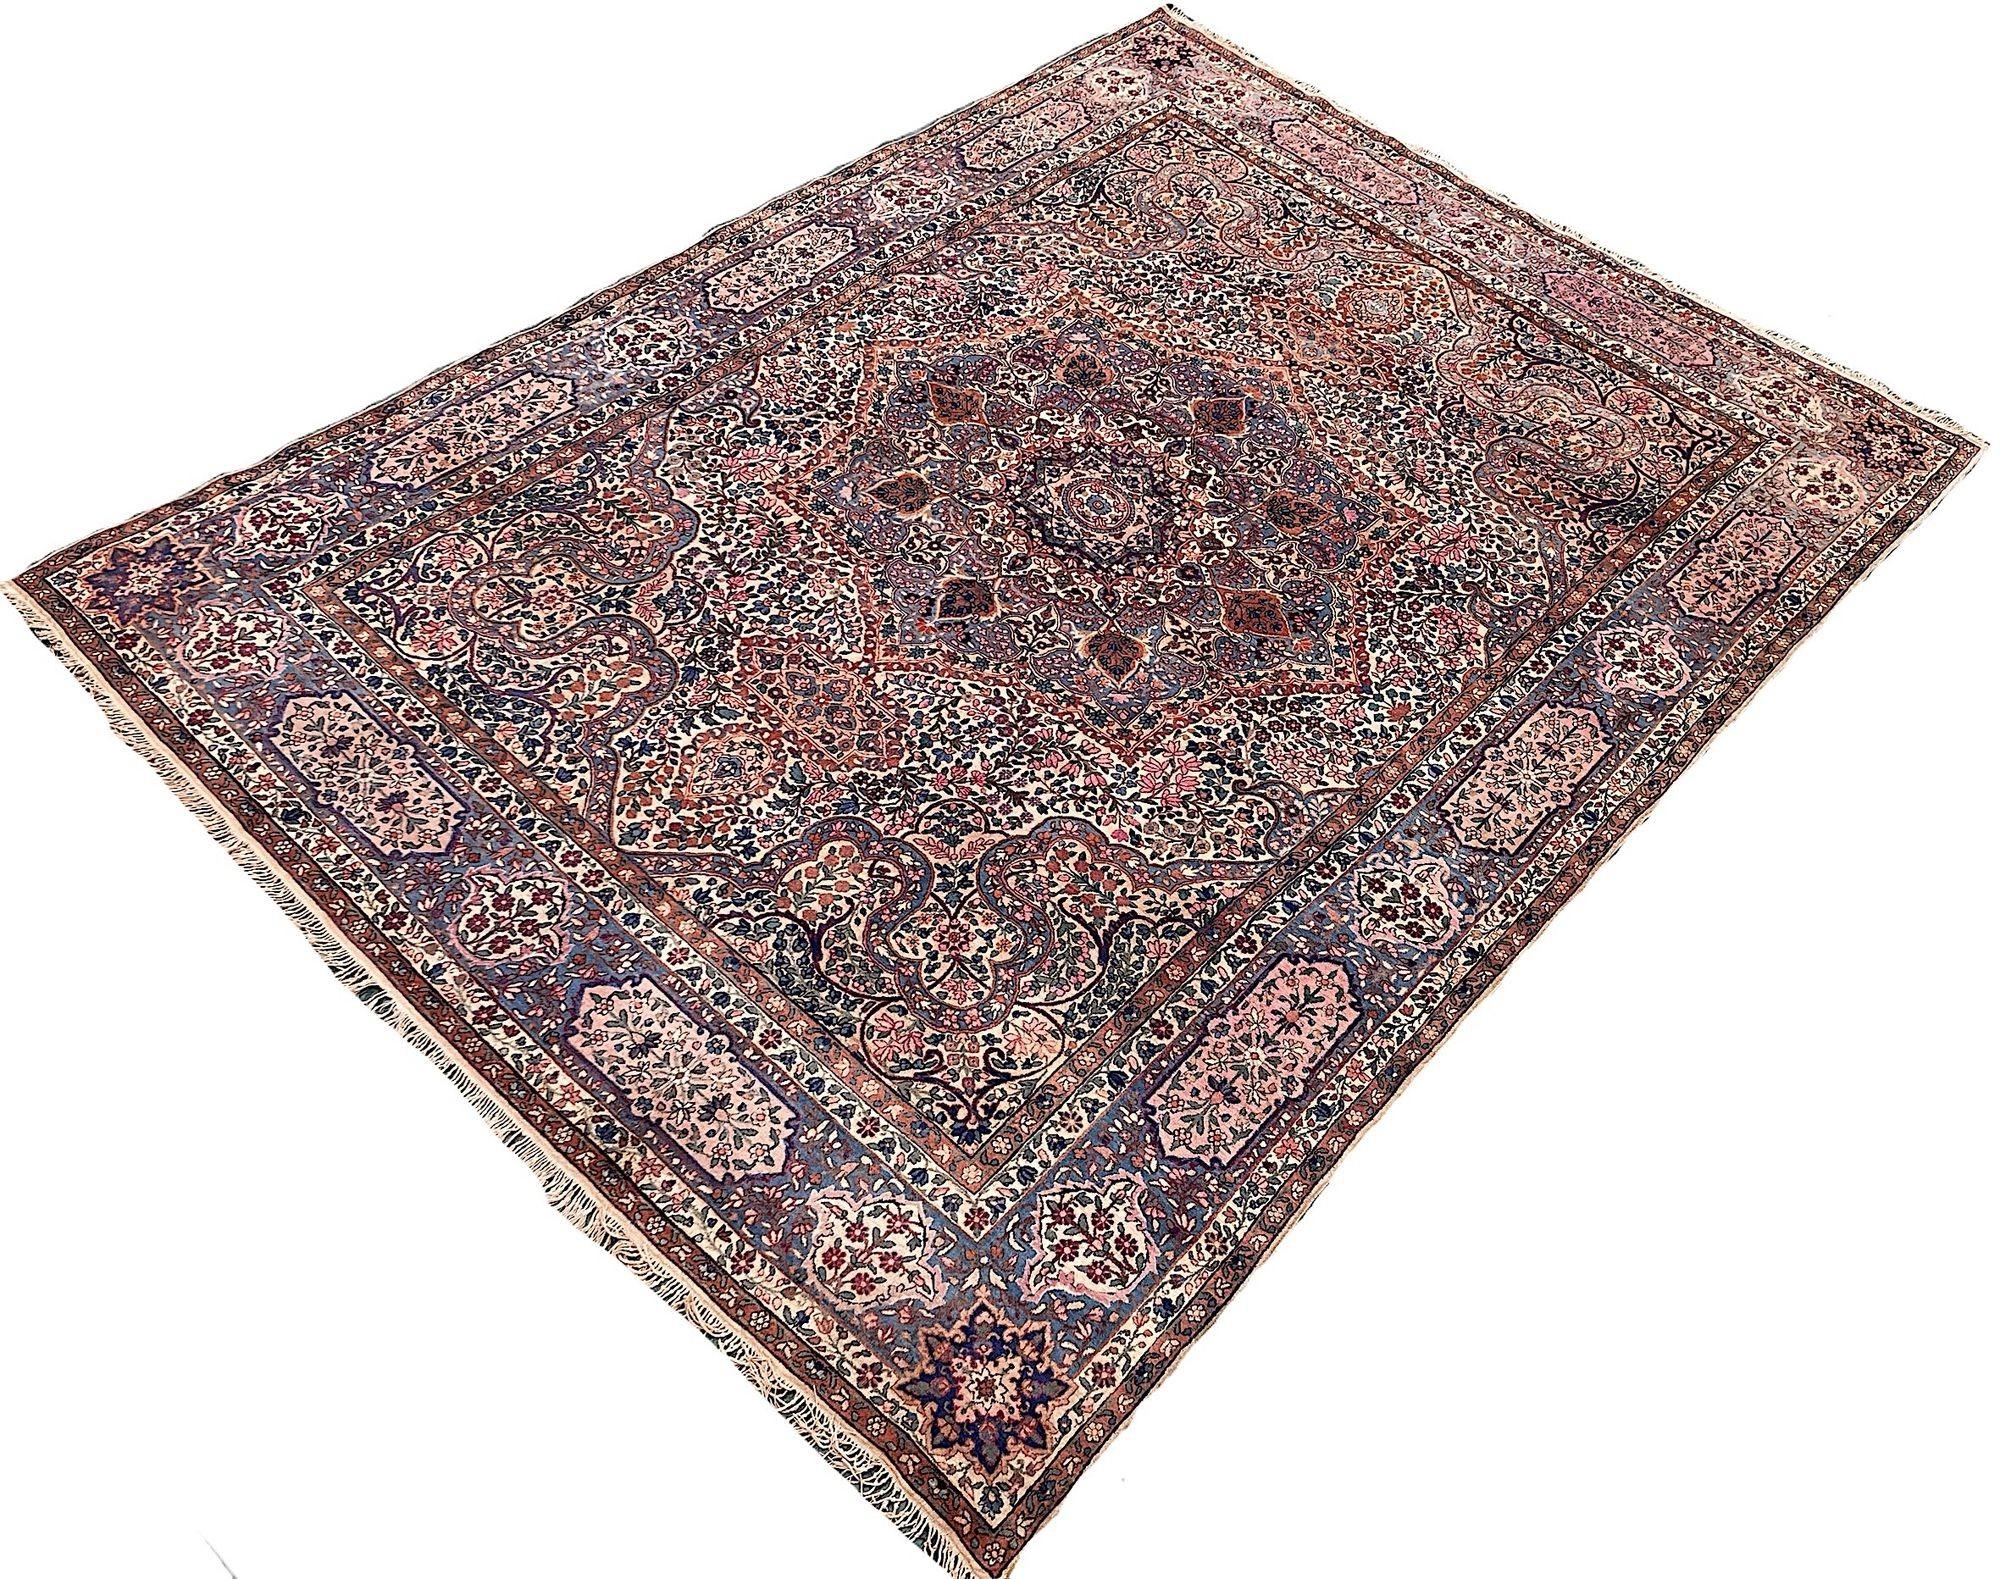 Antique Kirman Lavar Carpet 3.40m x 2.55m In Good Condition For Sale In St. Albans, GB